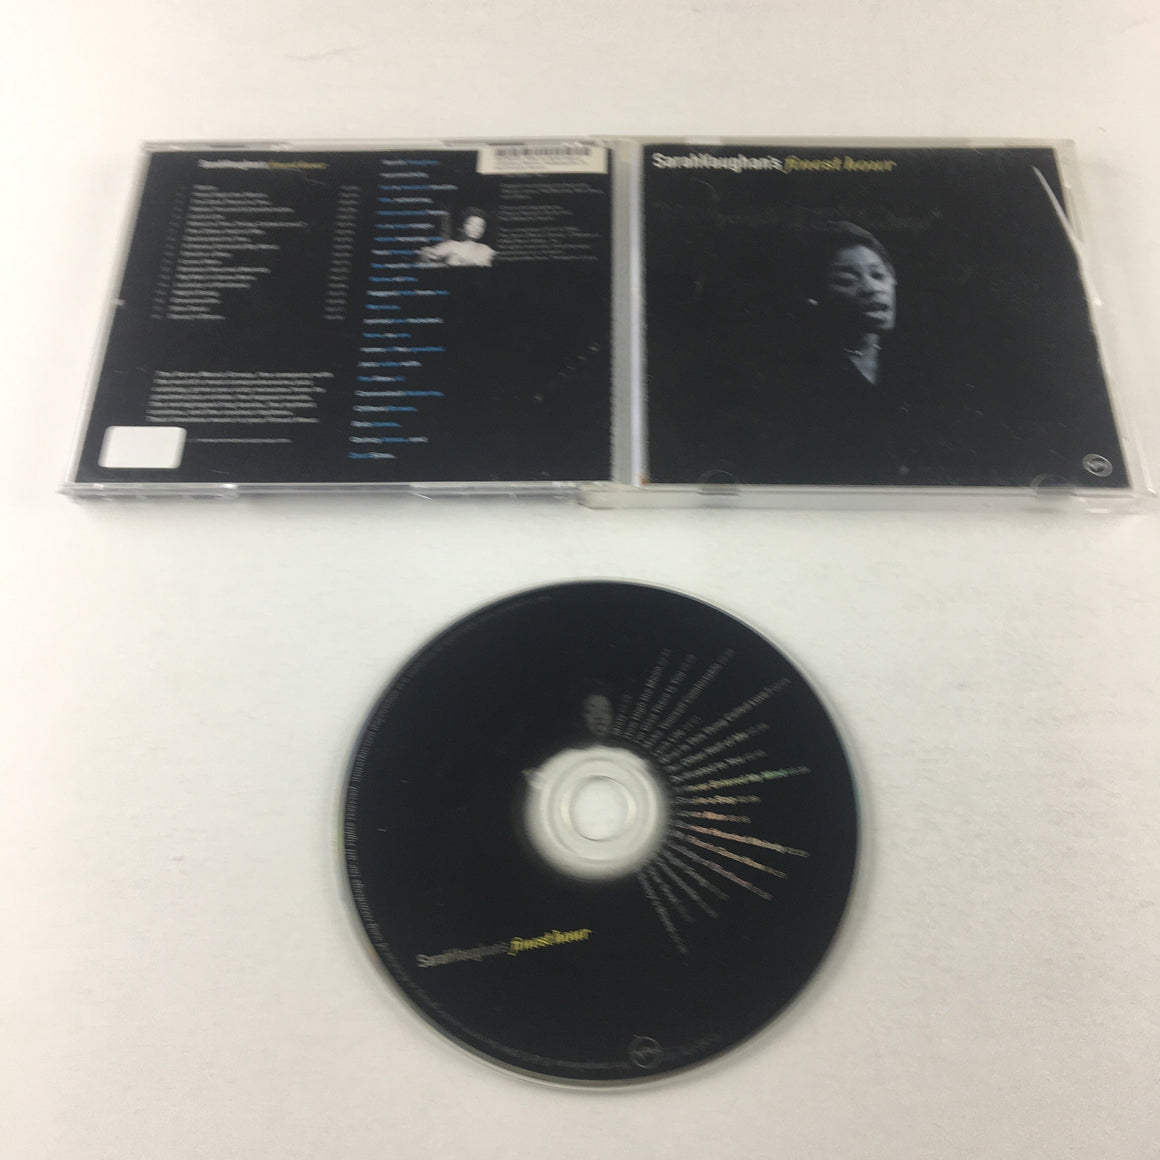 Sarah Vaugan Sarah Vaughan's Finest Hour Used CD VG+\VG+